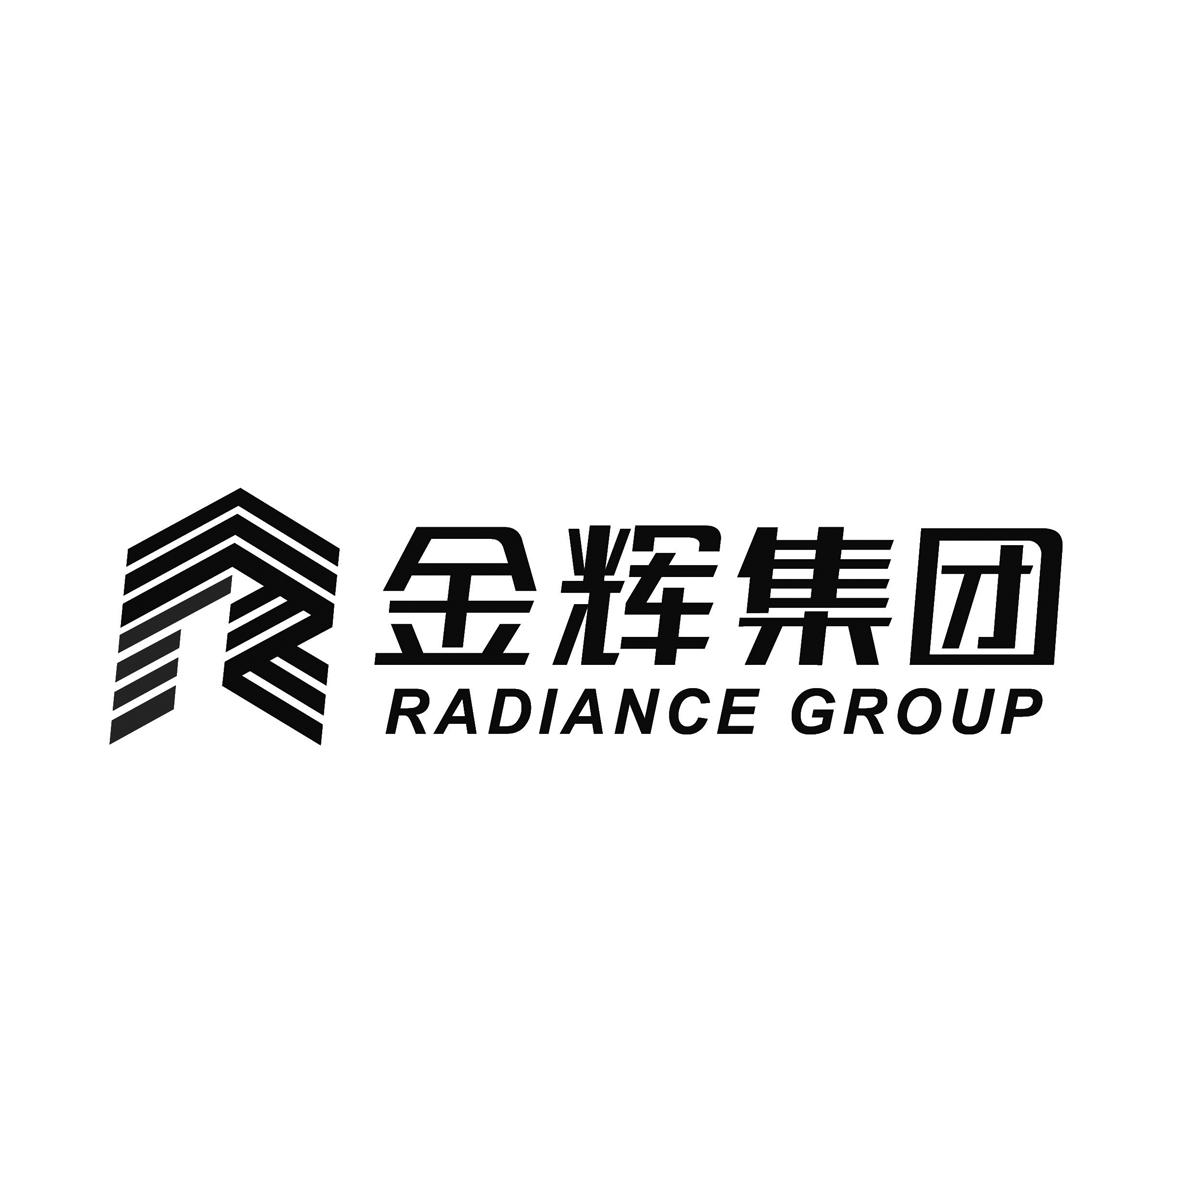 金辉集团 radiance group